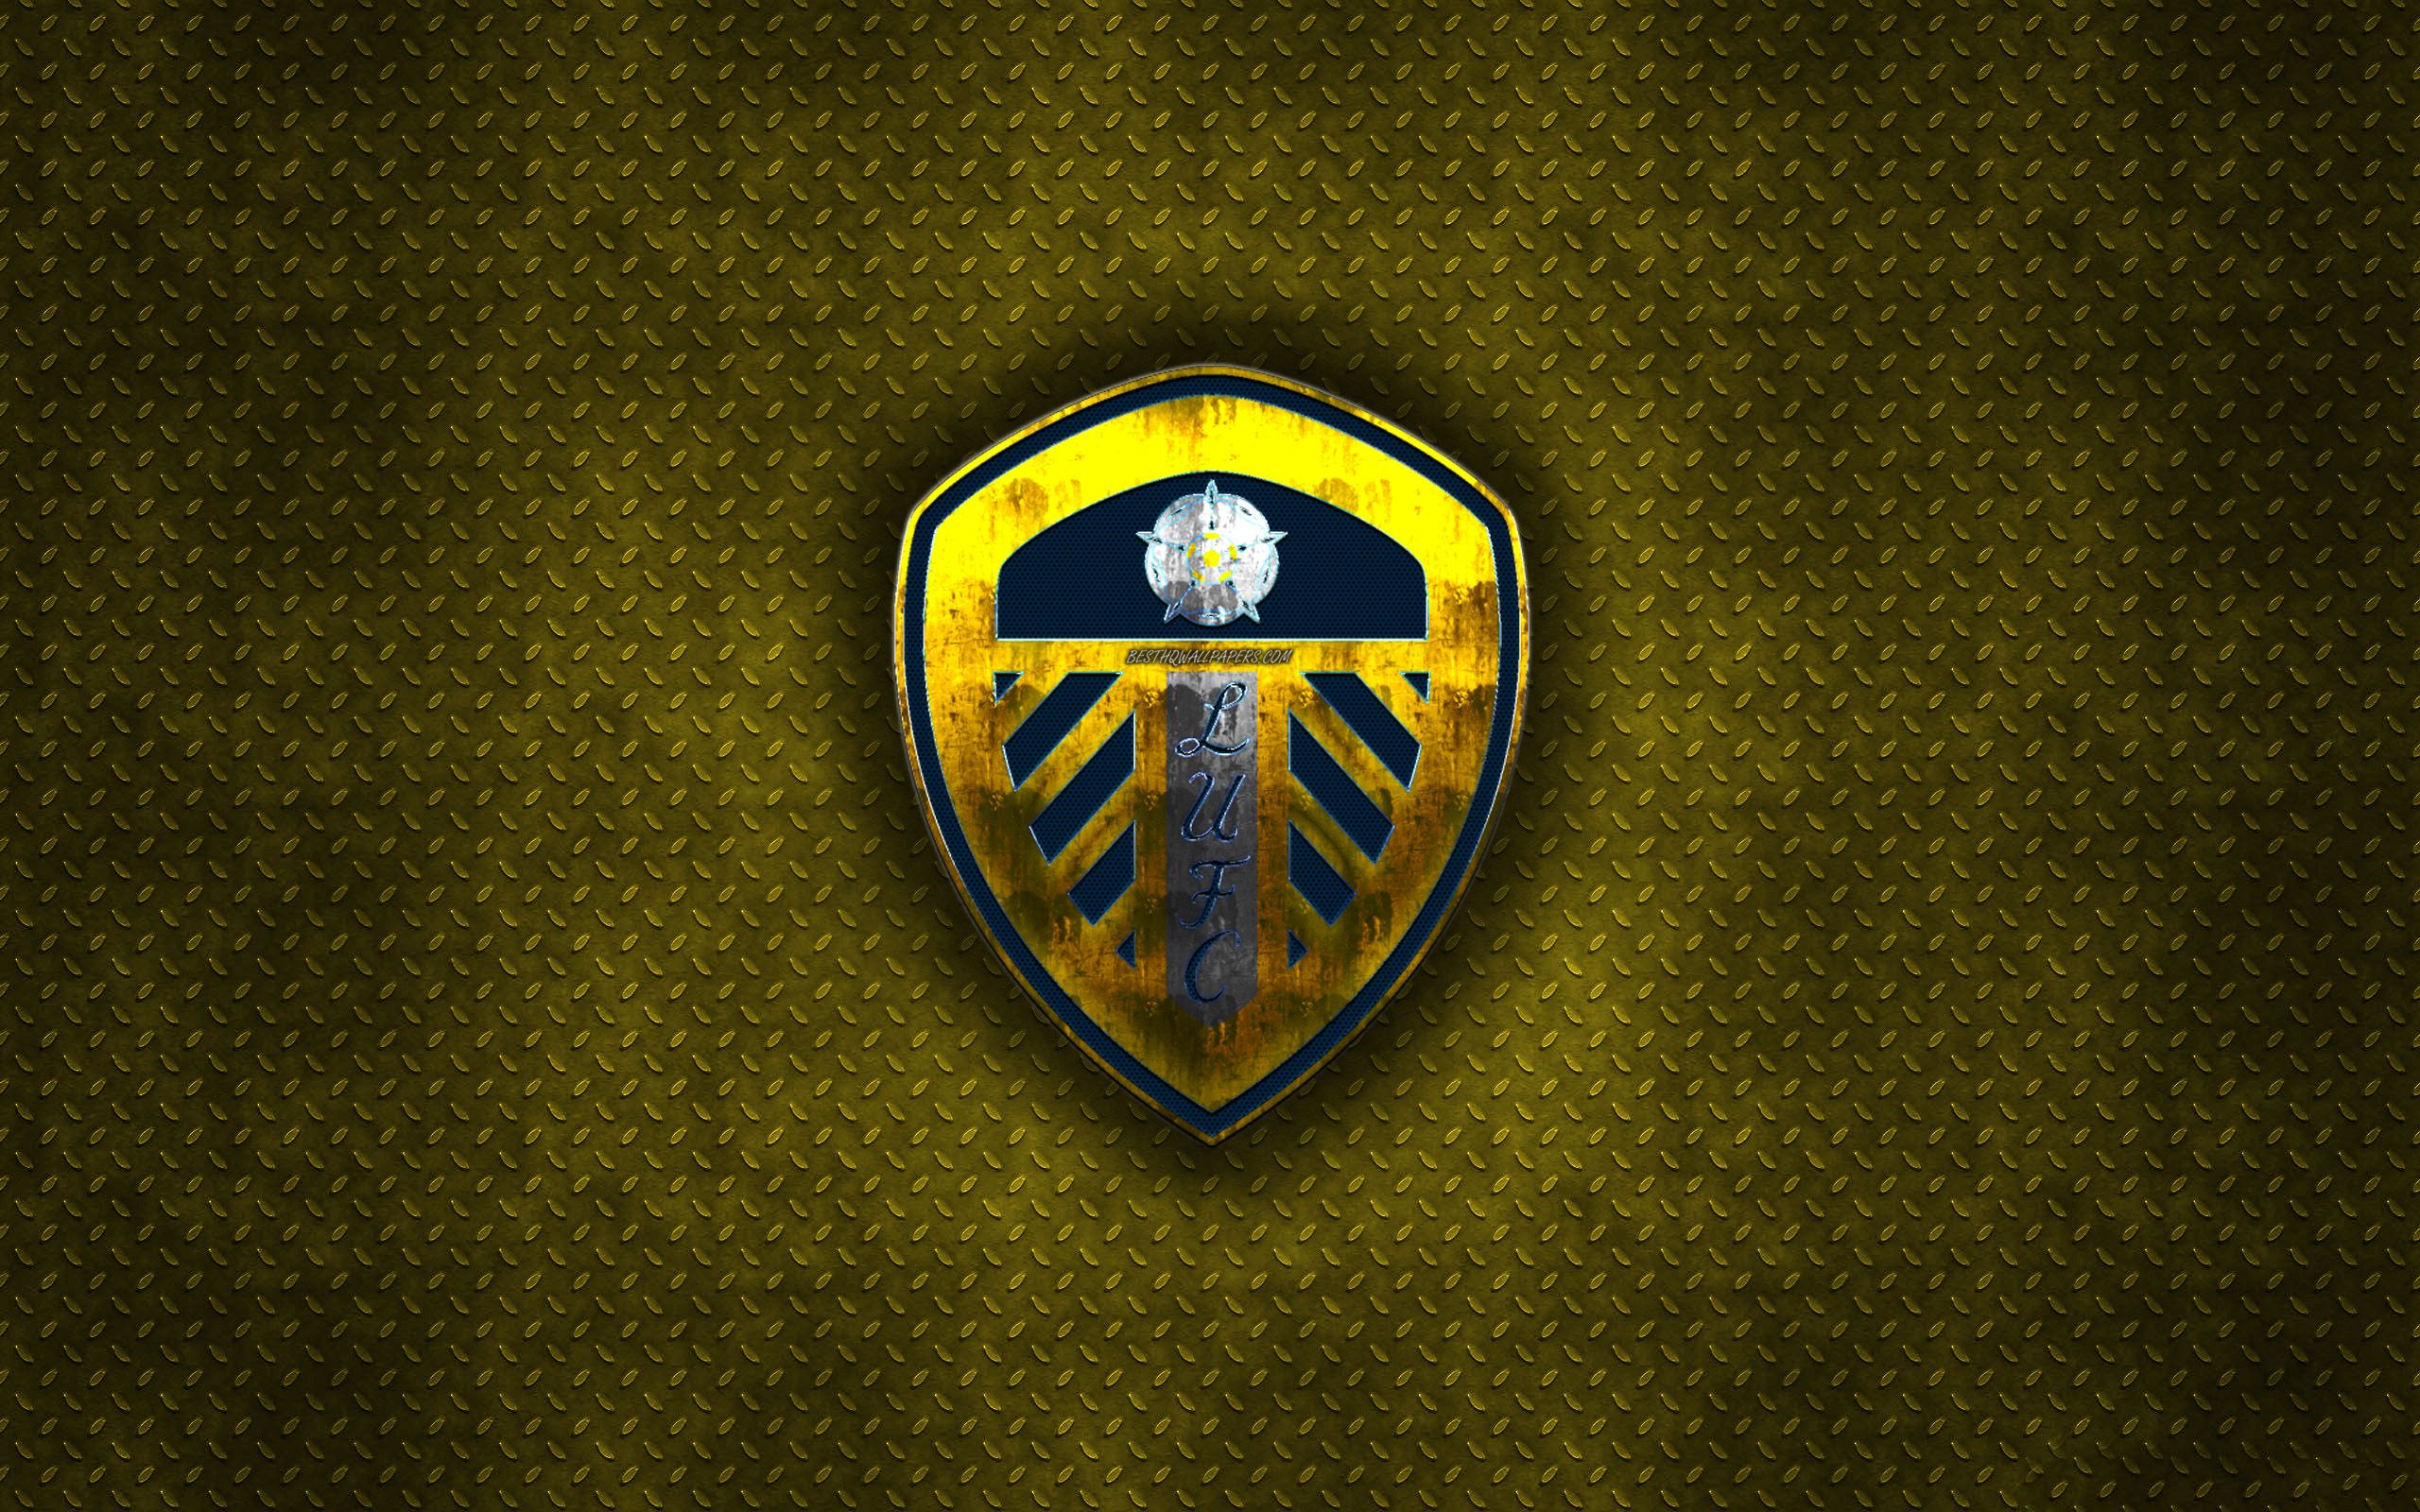 Download wallpaper Leeds United FC, English football club, yellow